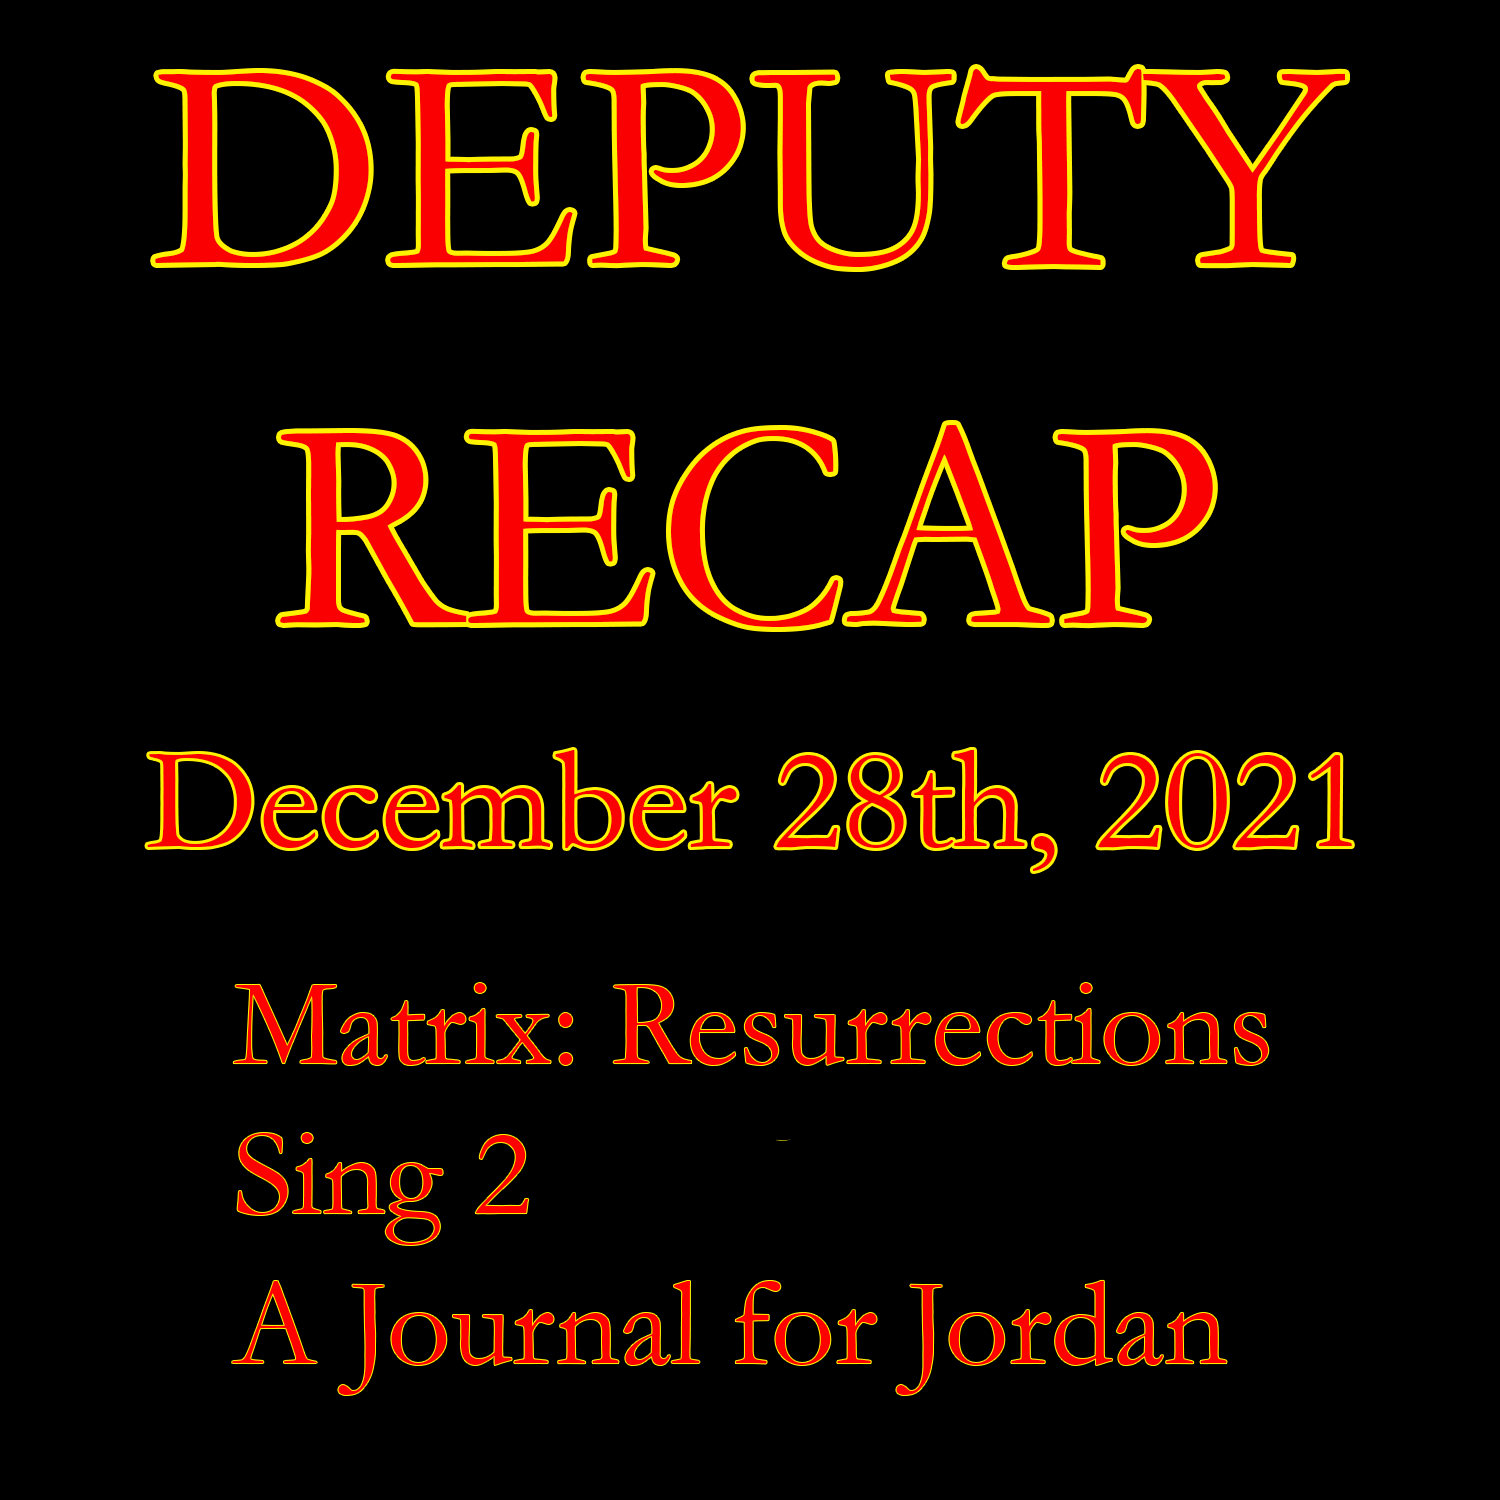 Movie Recap - December 28th, 2021